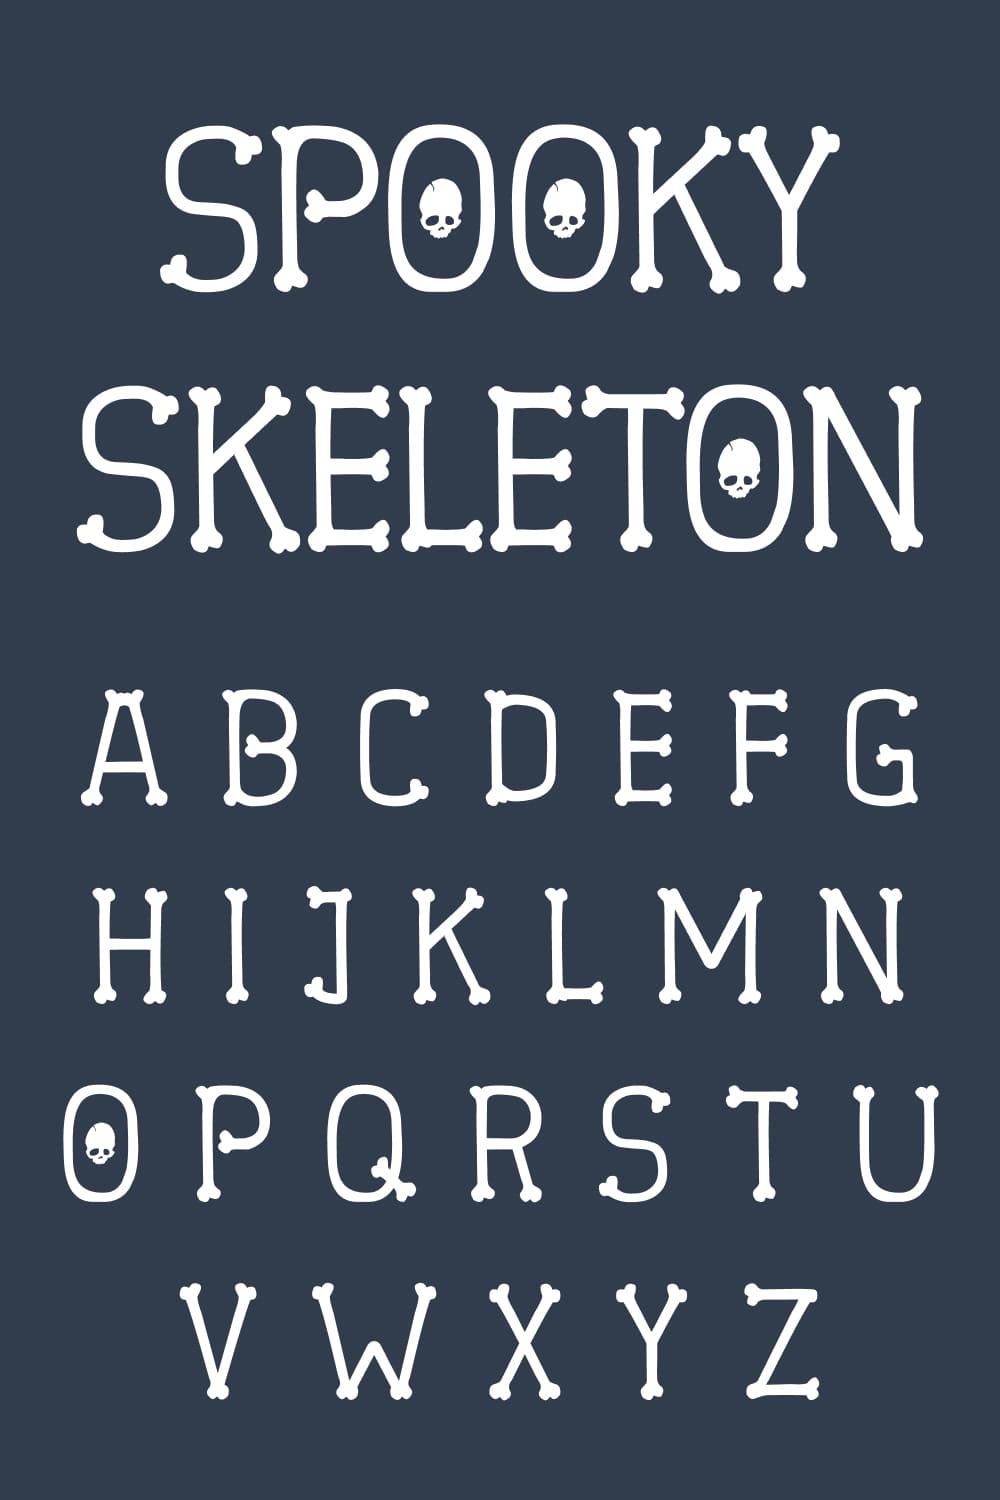 Free spooky skeleton font - Pinterest.